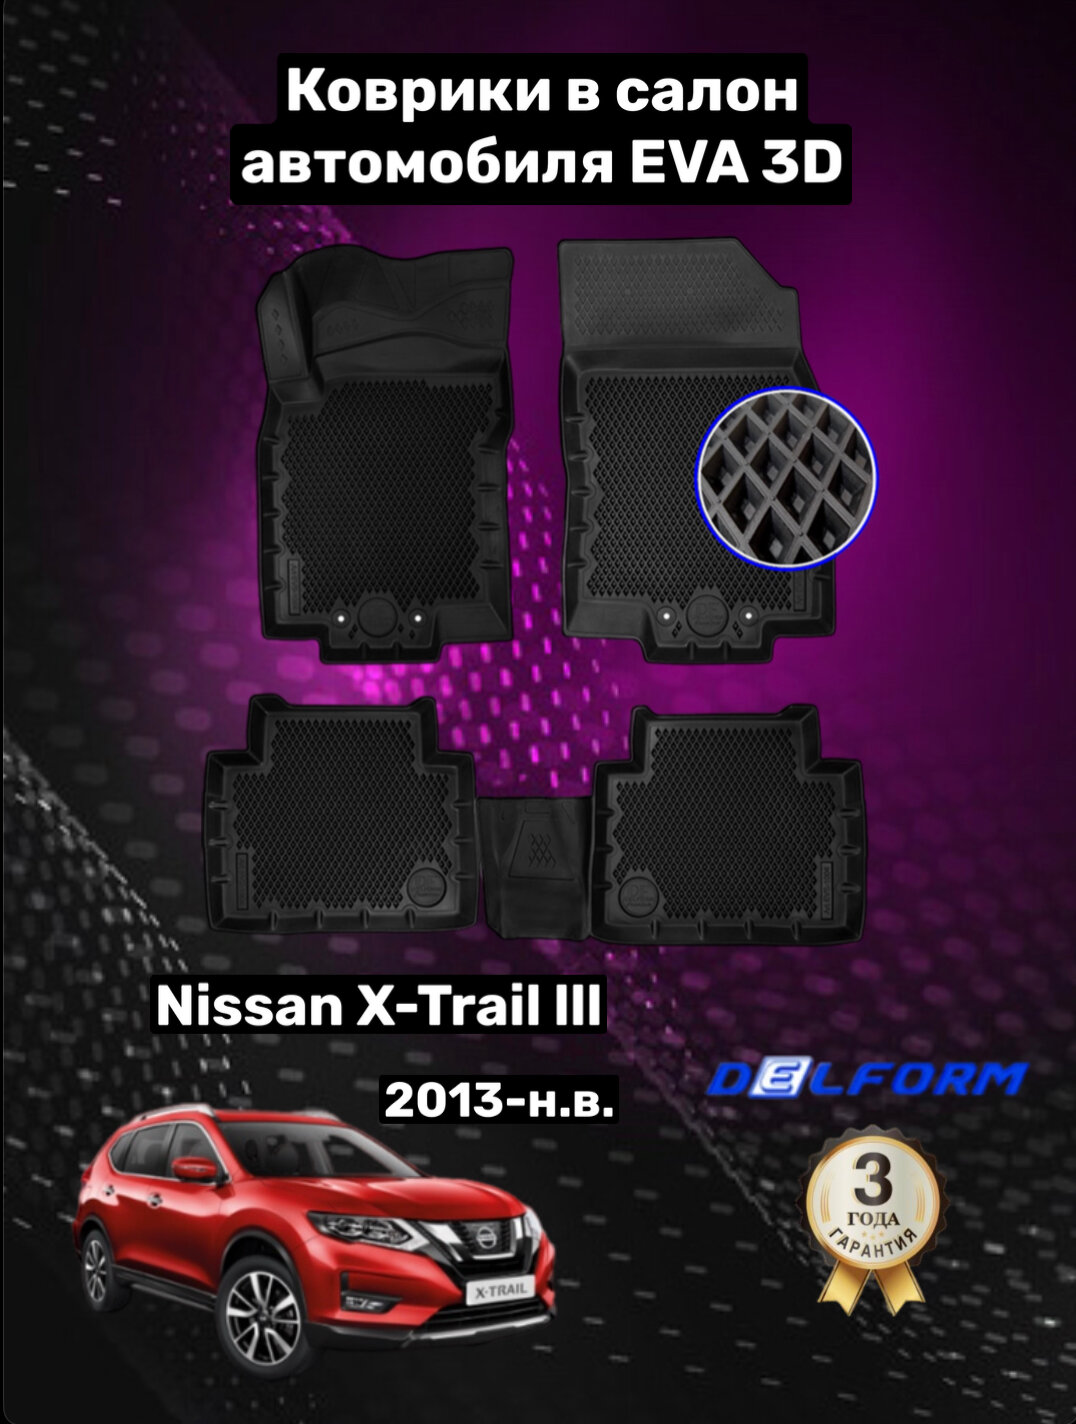 Эва/Eva Ева коврики c бортами Ниссан Икс Трейл 3 (Т32) (2013-)/Nissan X-Trail III (T32)/ DELFORM 3D Premium ("EVA 3D") cалон